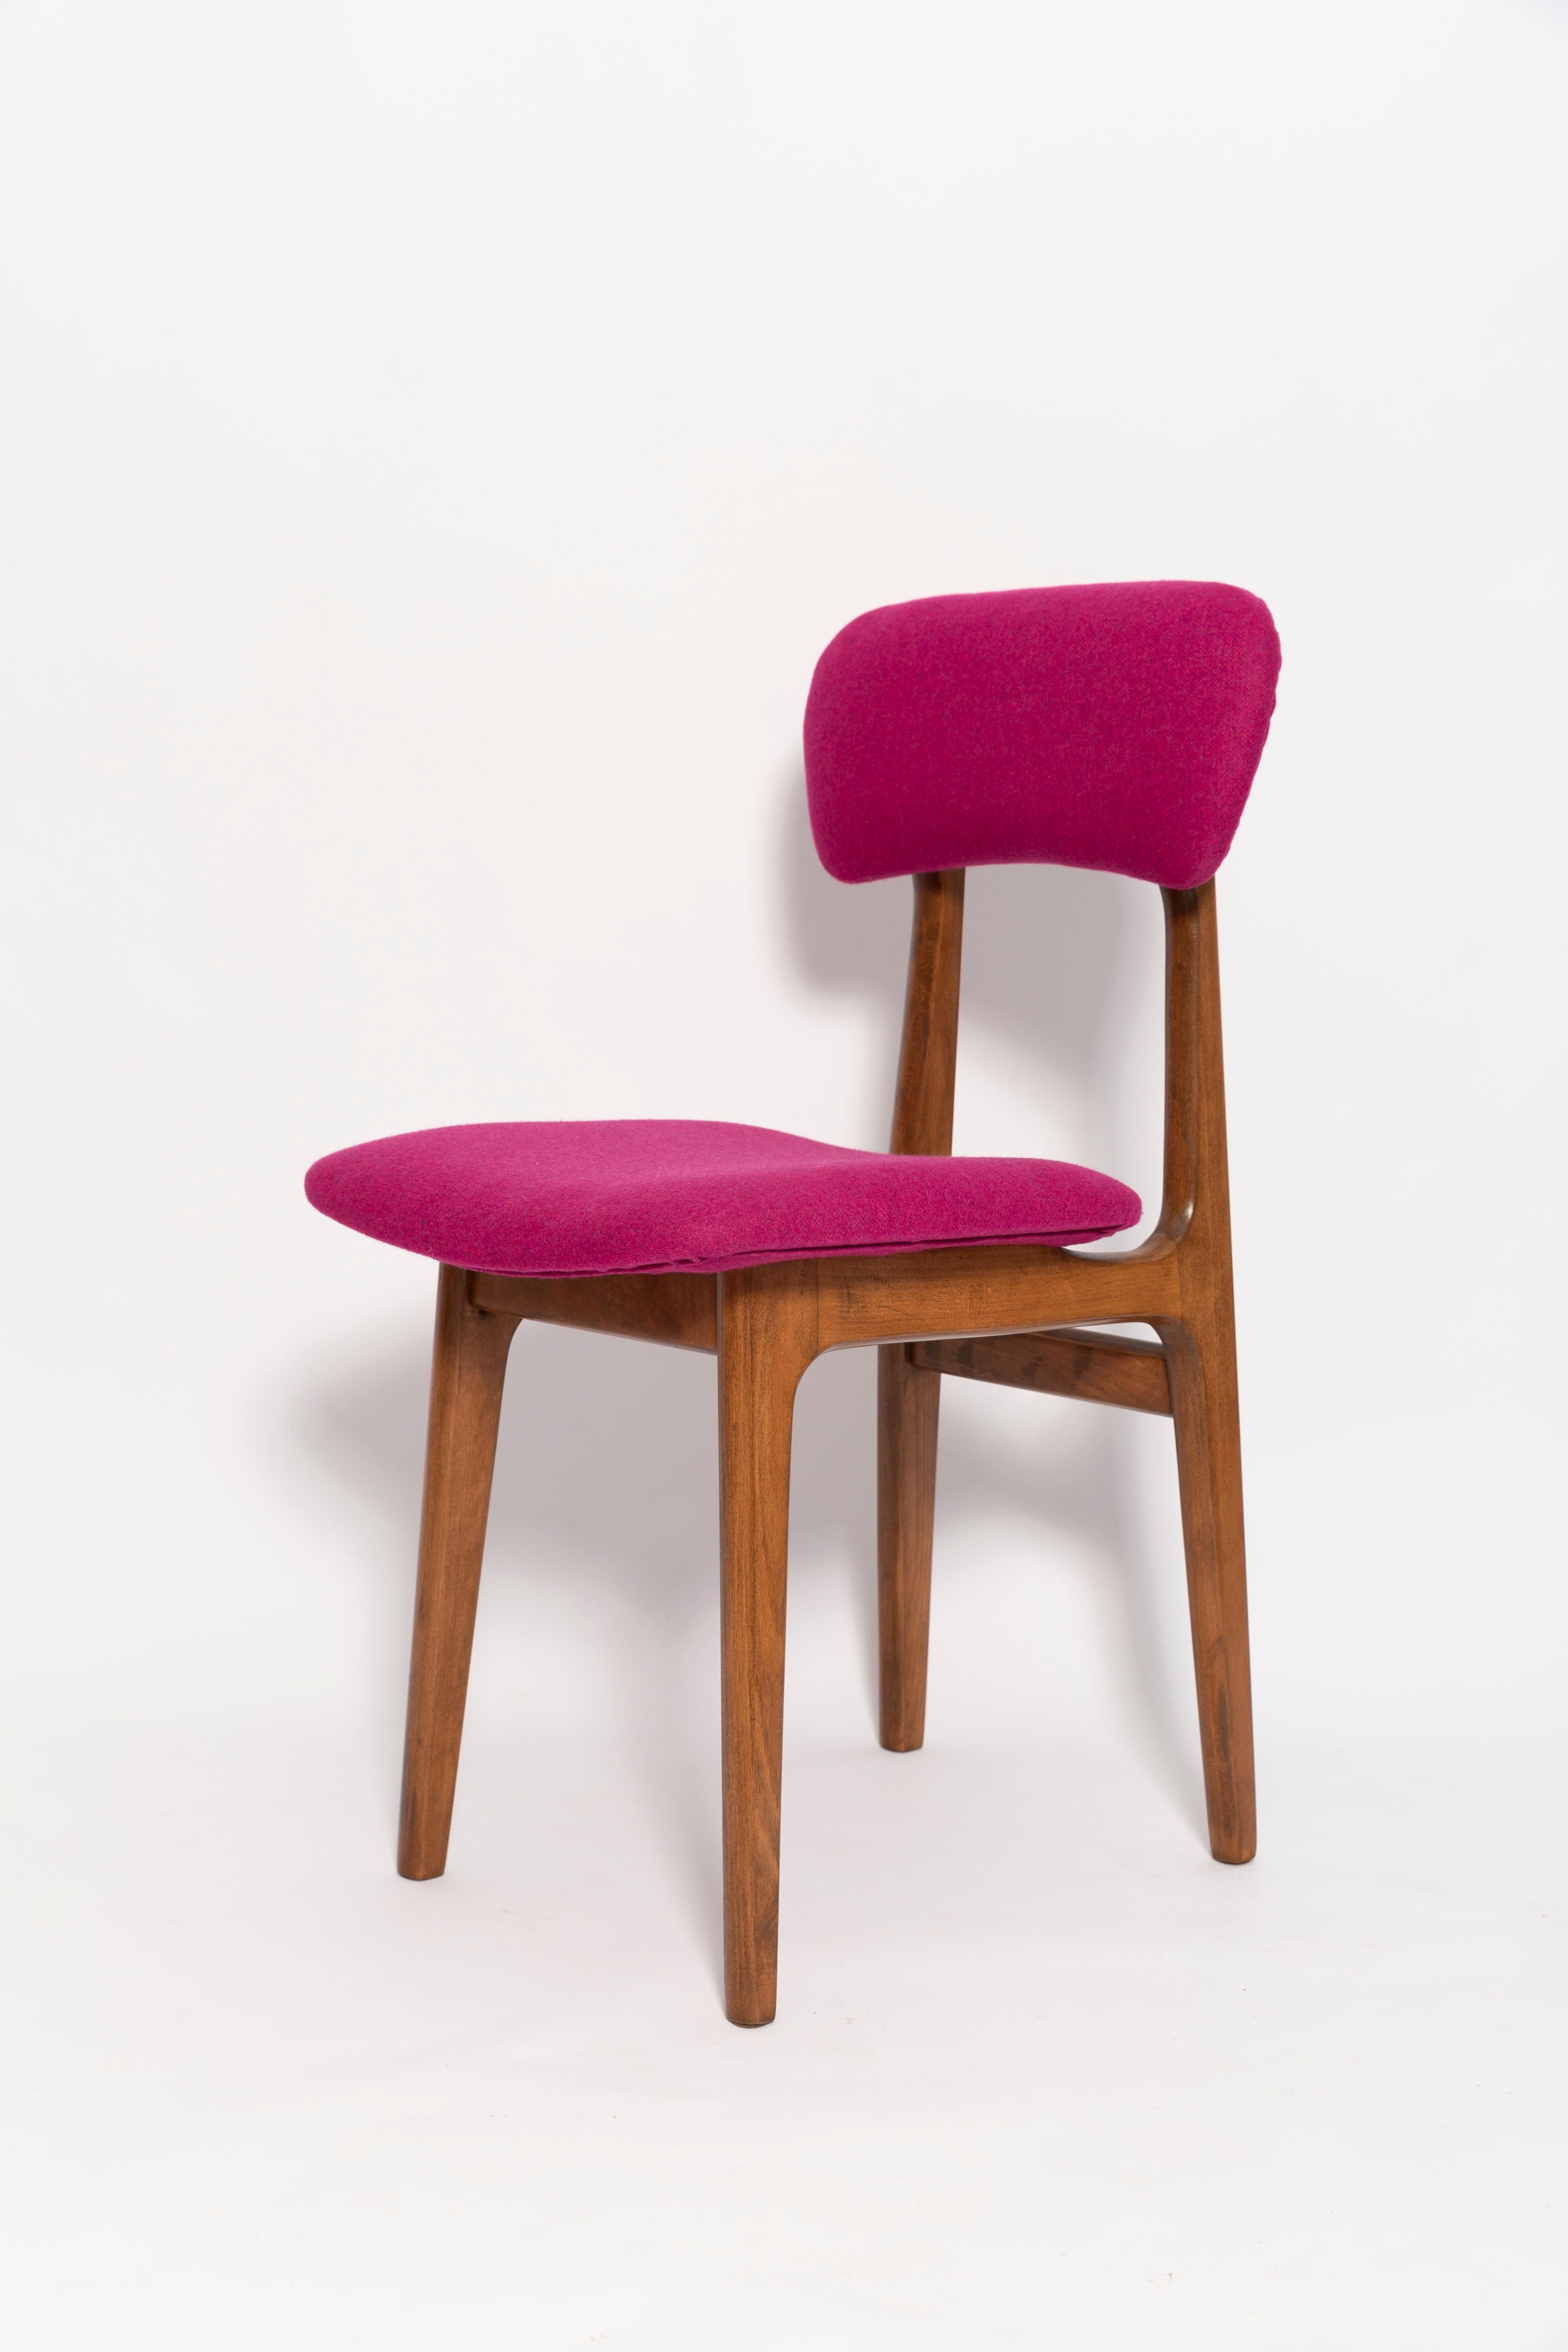 20th Century Mid Century Fuchsia Pink Wool Chair, Walnut Wood, Rajmund Halas, Europe, 1960s For Sale